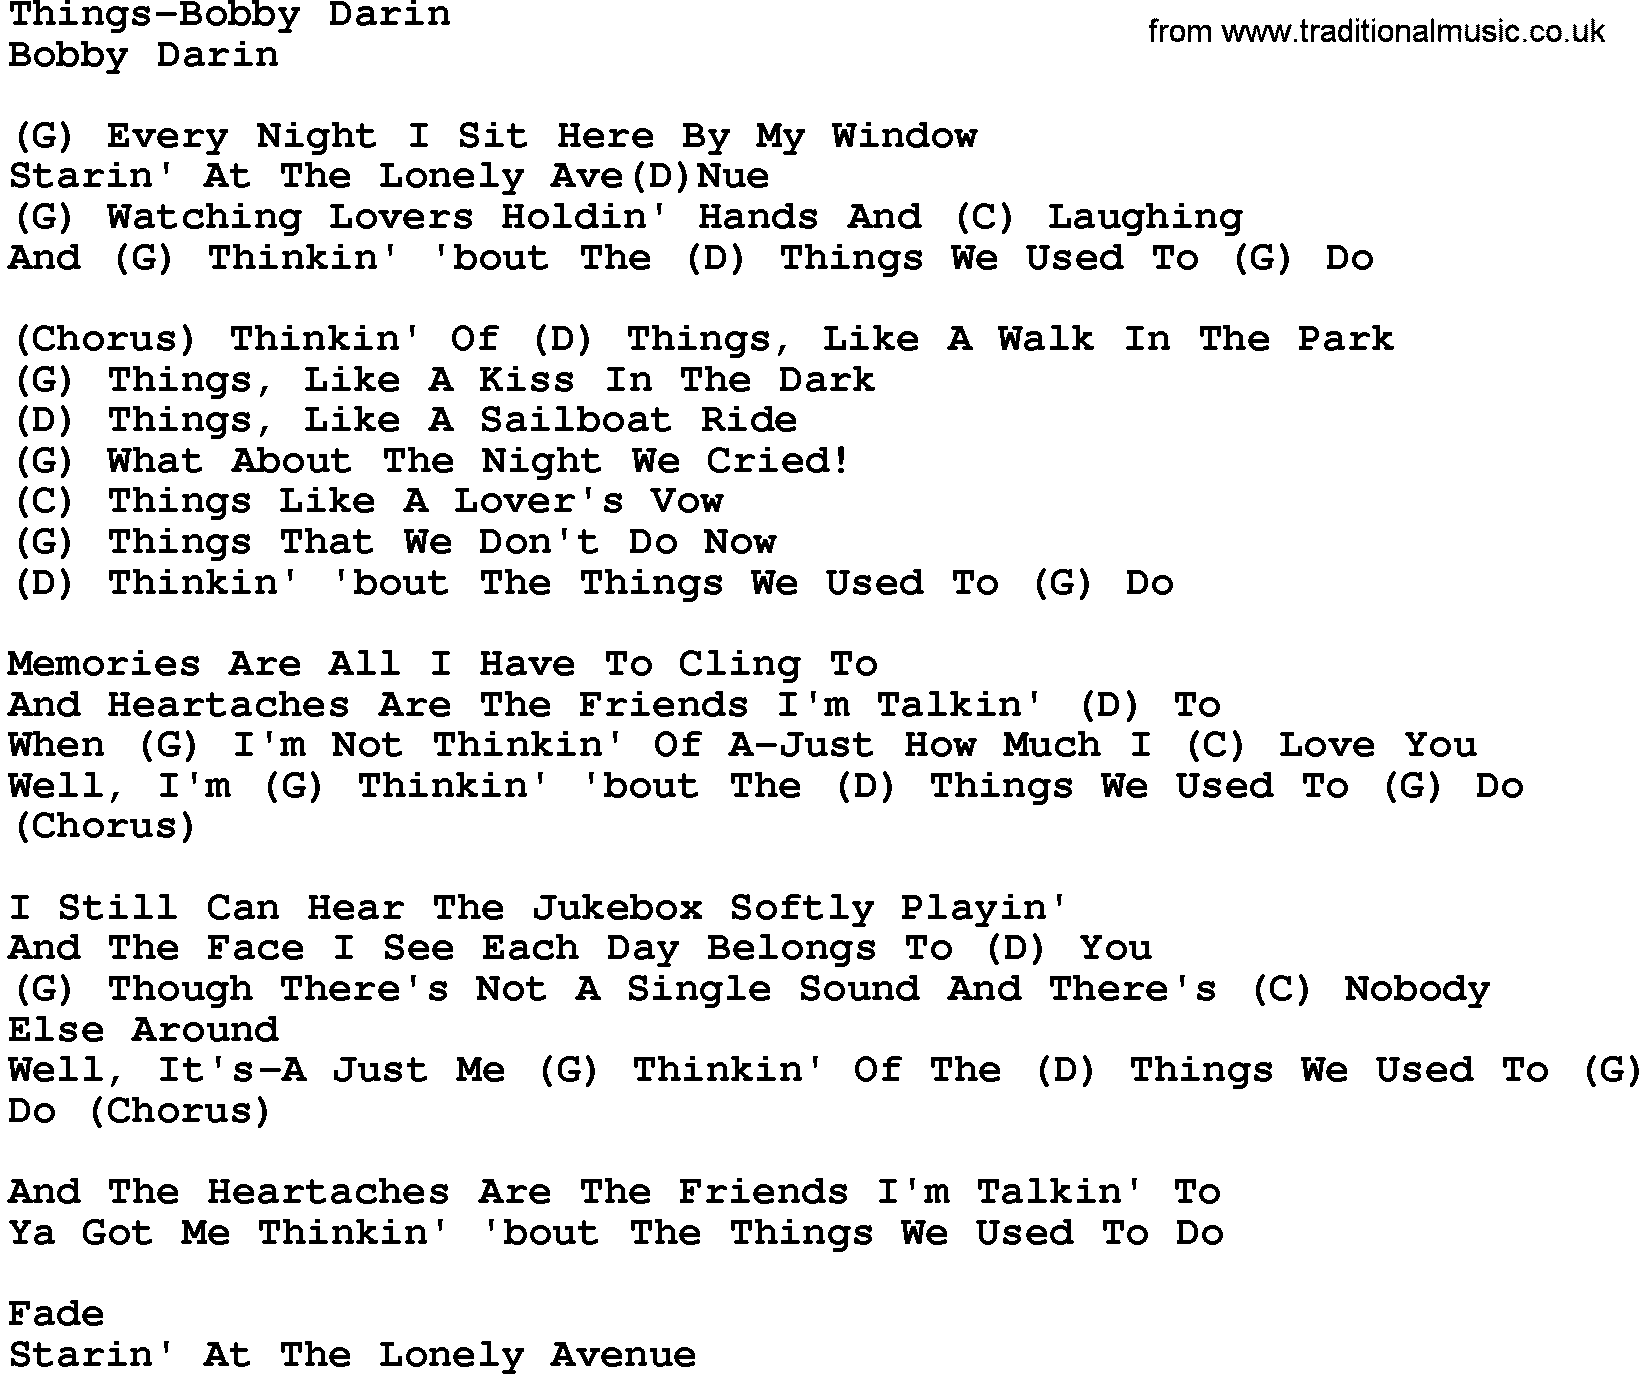 Country music song: Things-Bobby Darin lyrics and chords